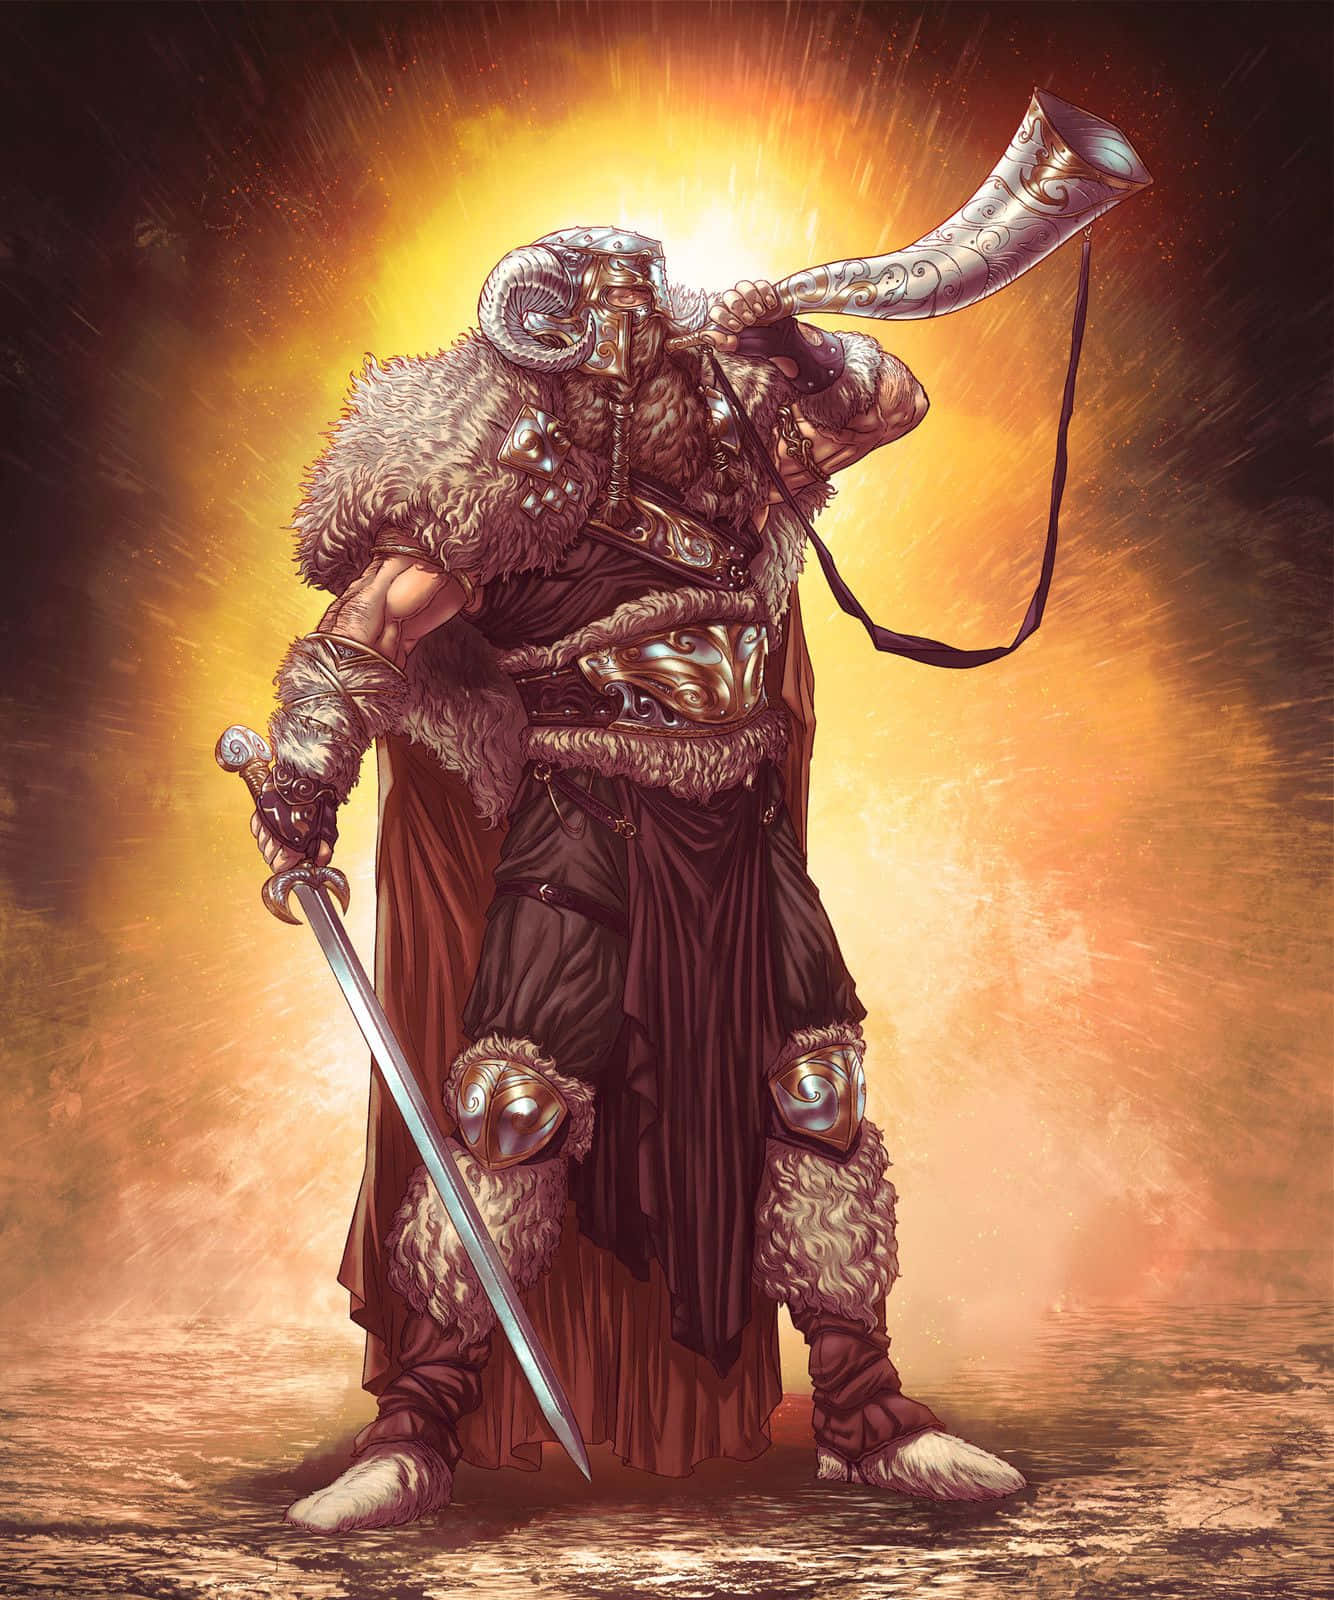 Heimdall, the Guardian of Asgard on Bifrost Bridge Wallpaper